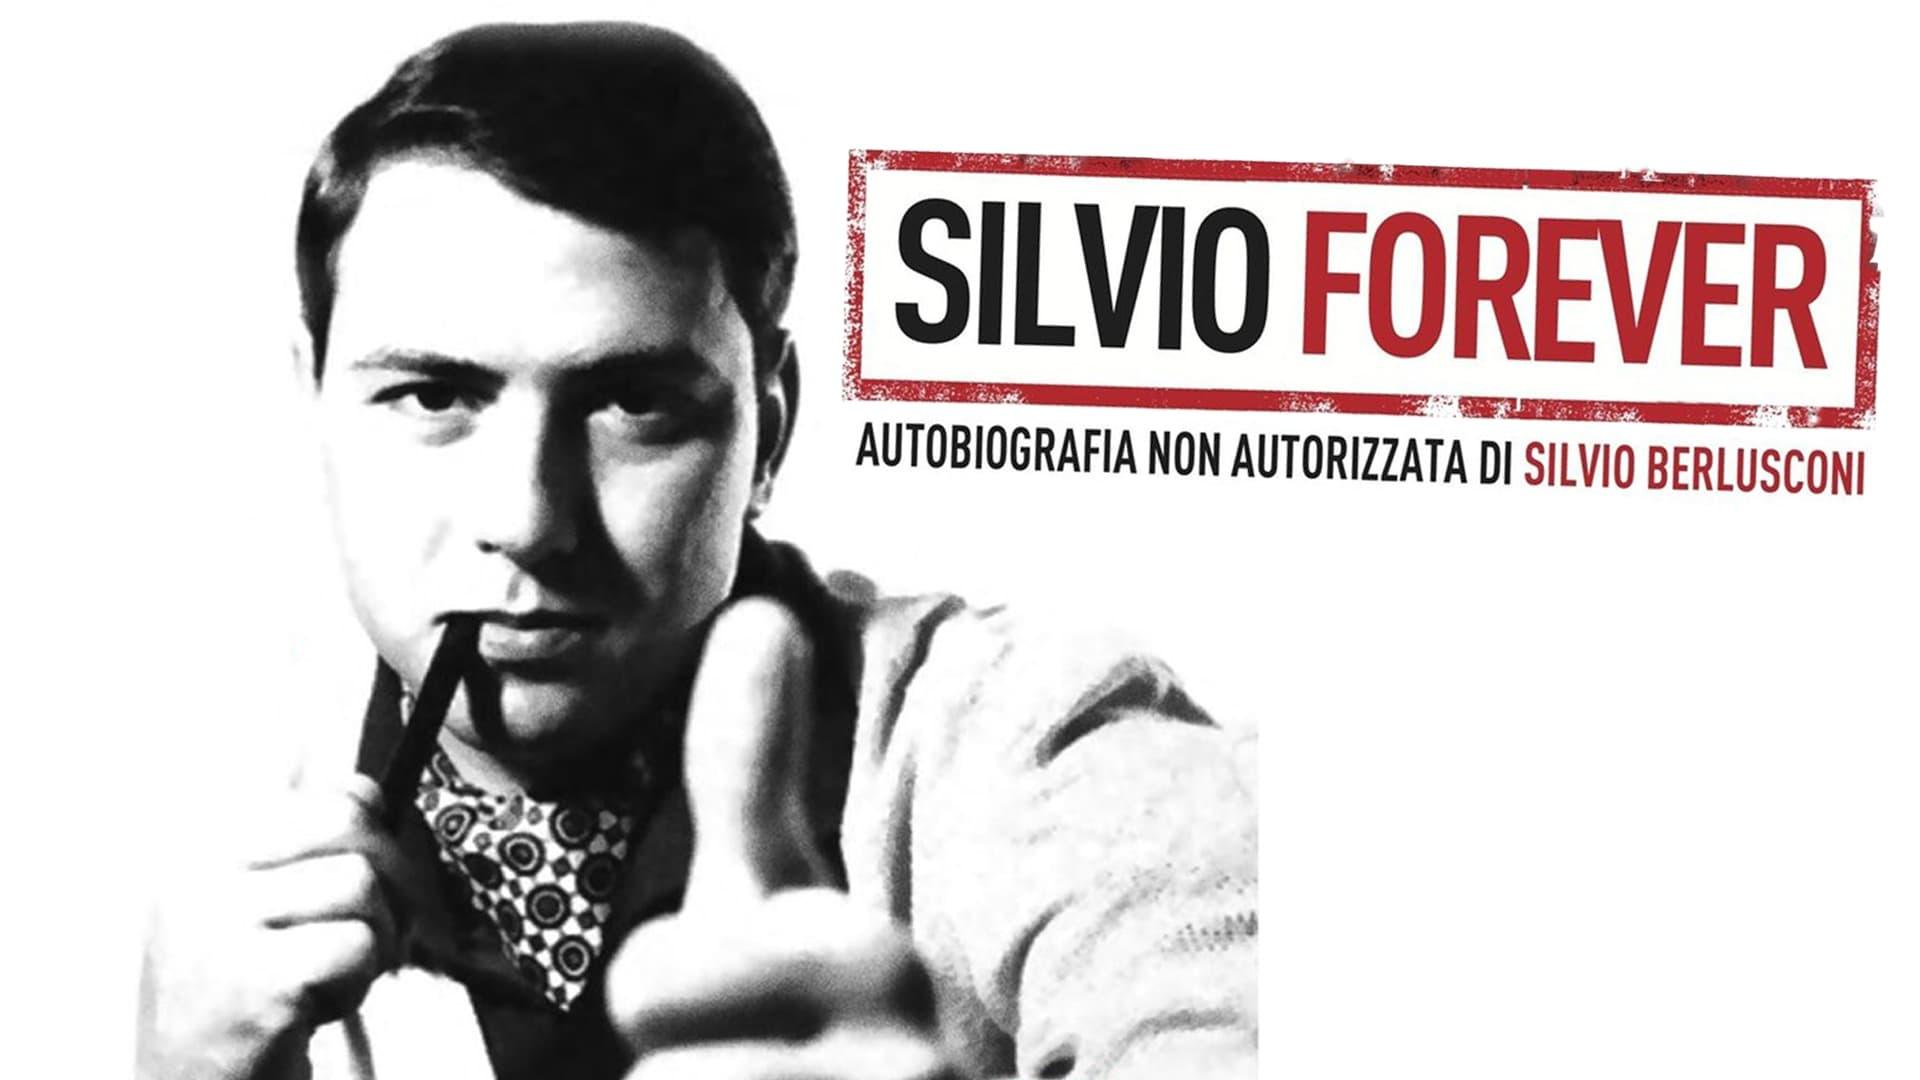 Silvio Forever backdrop